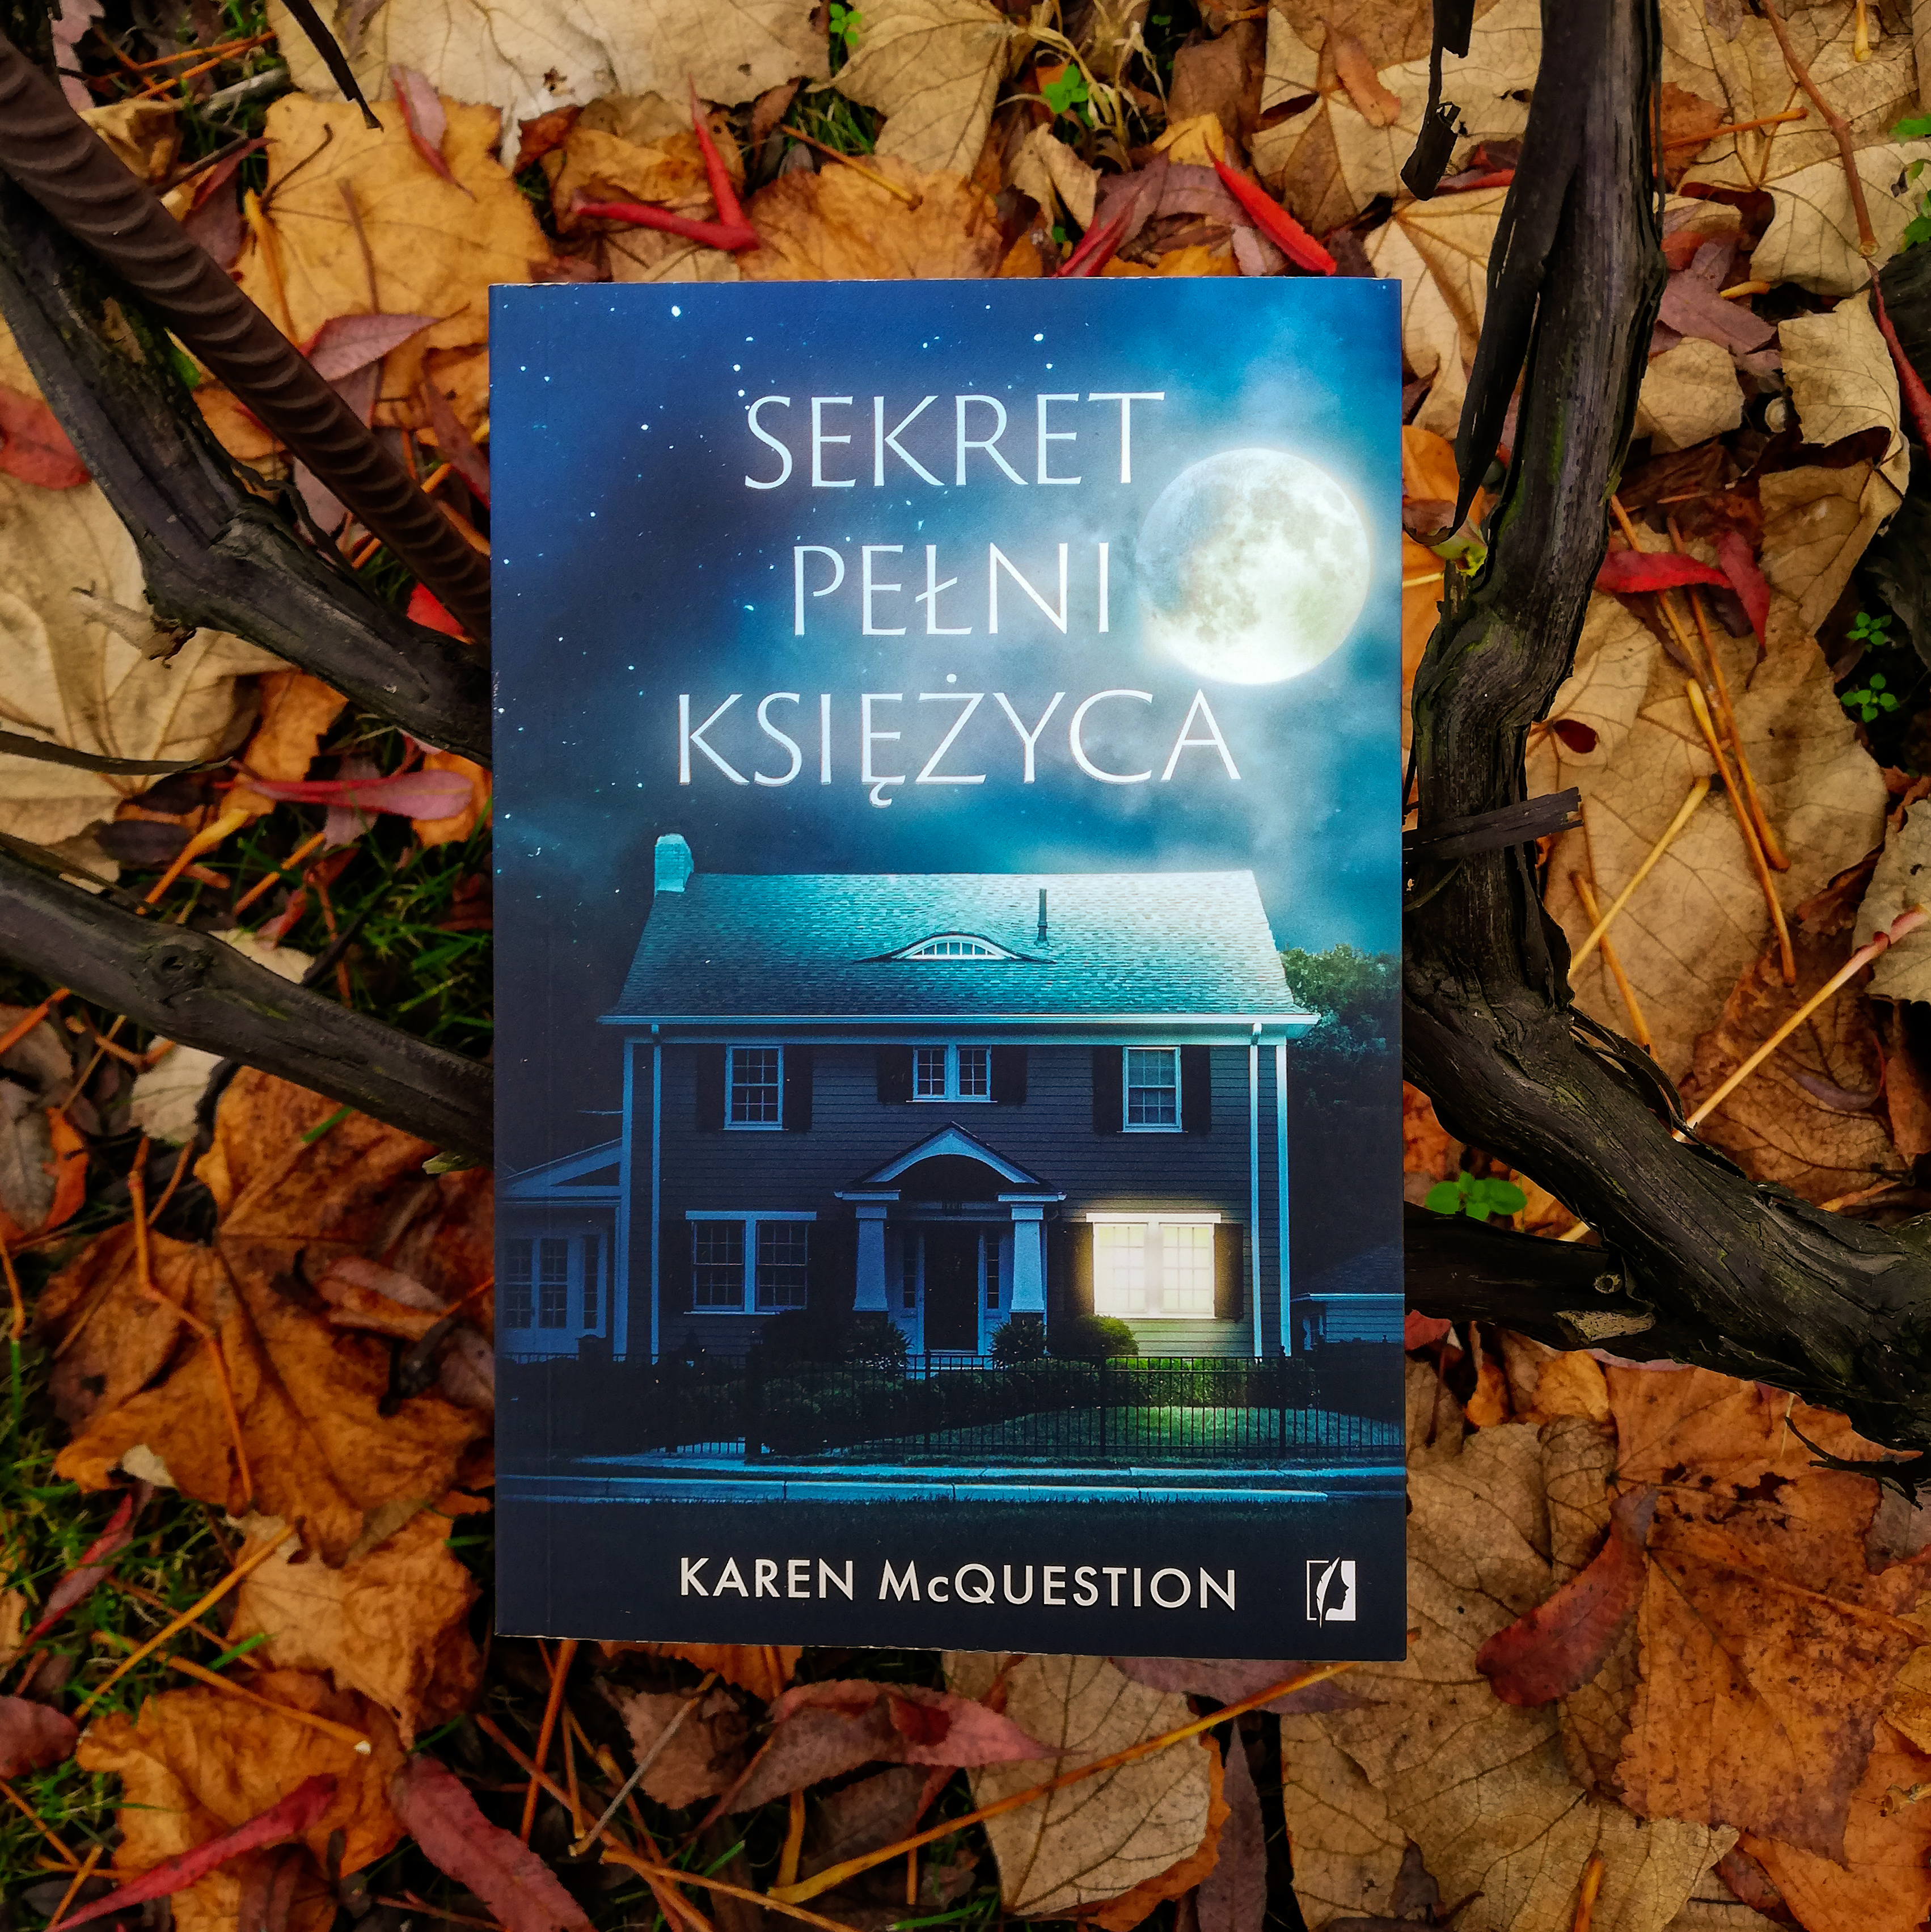  Recenzje książek: Sekret pełni księżyca - Karen McQuestion #272  